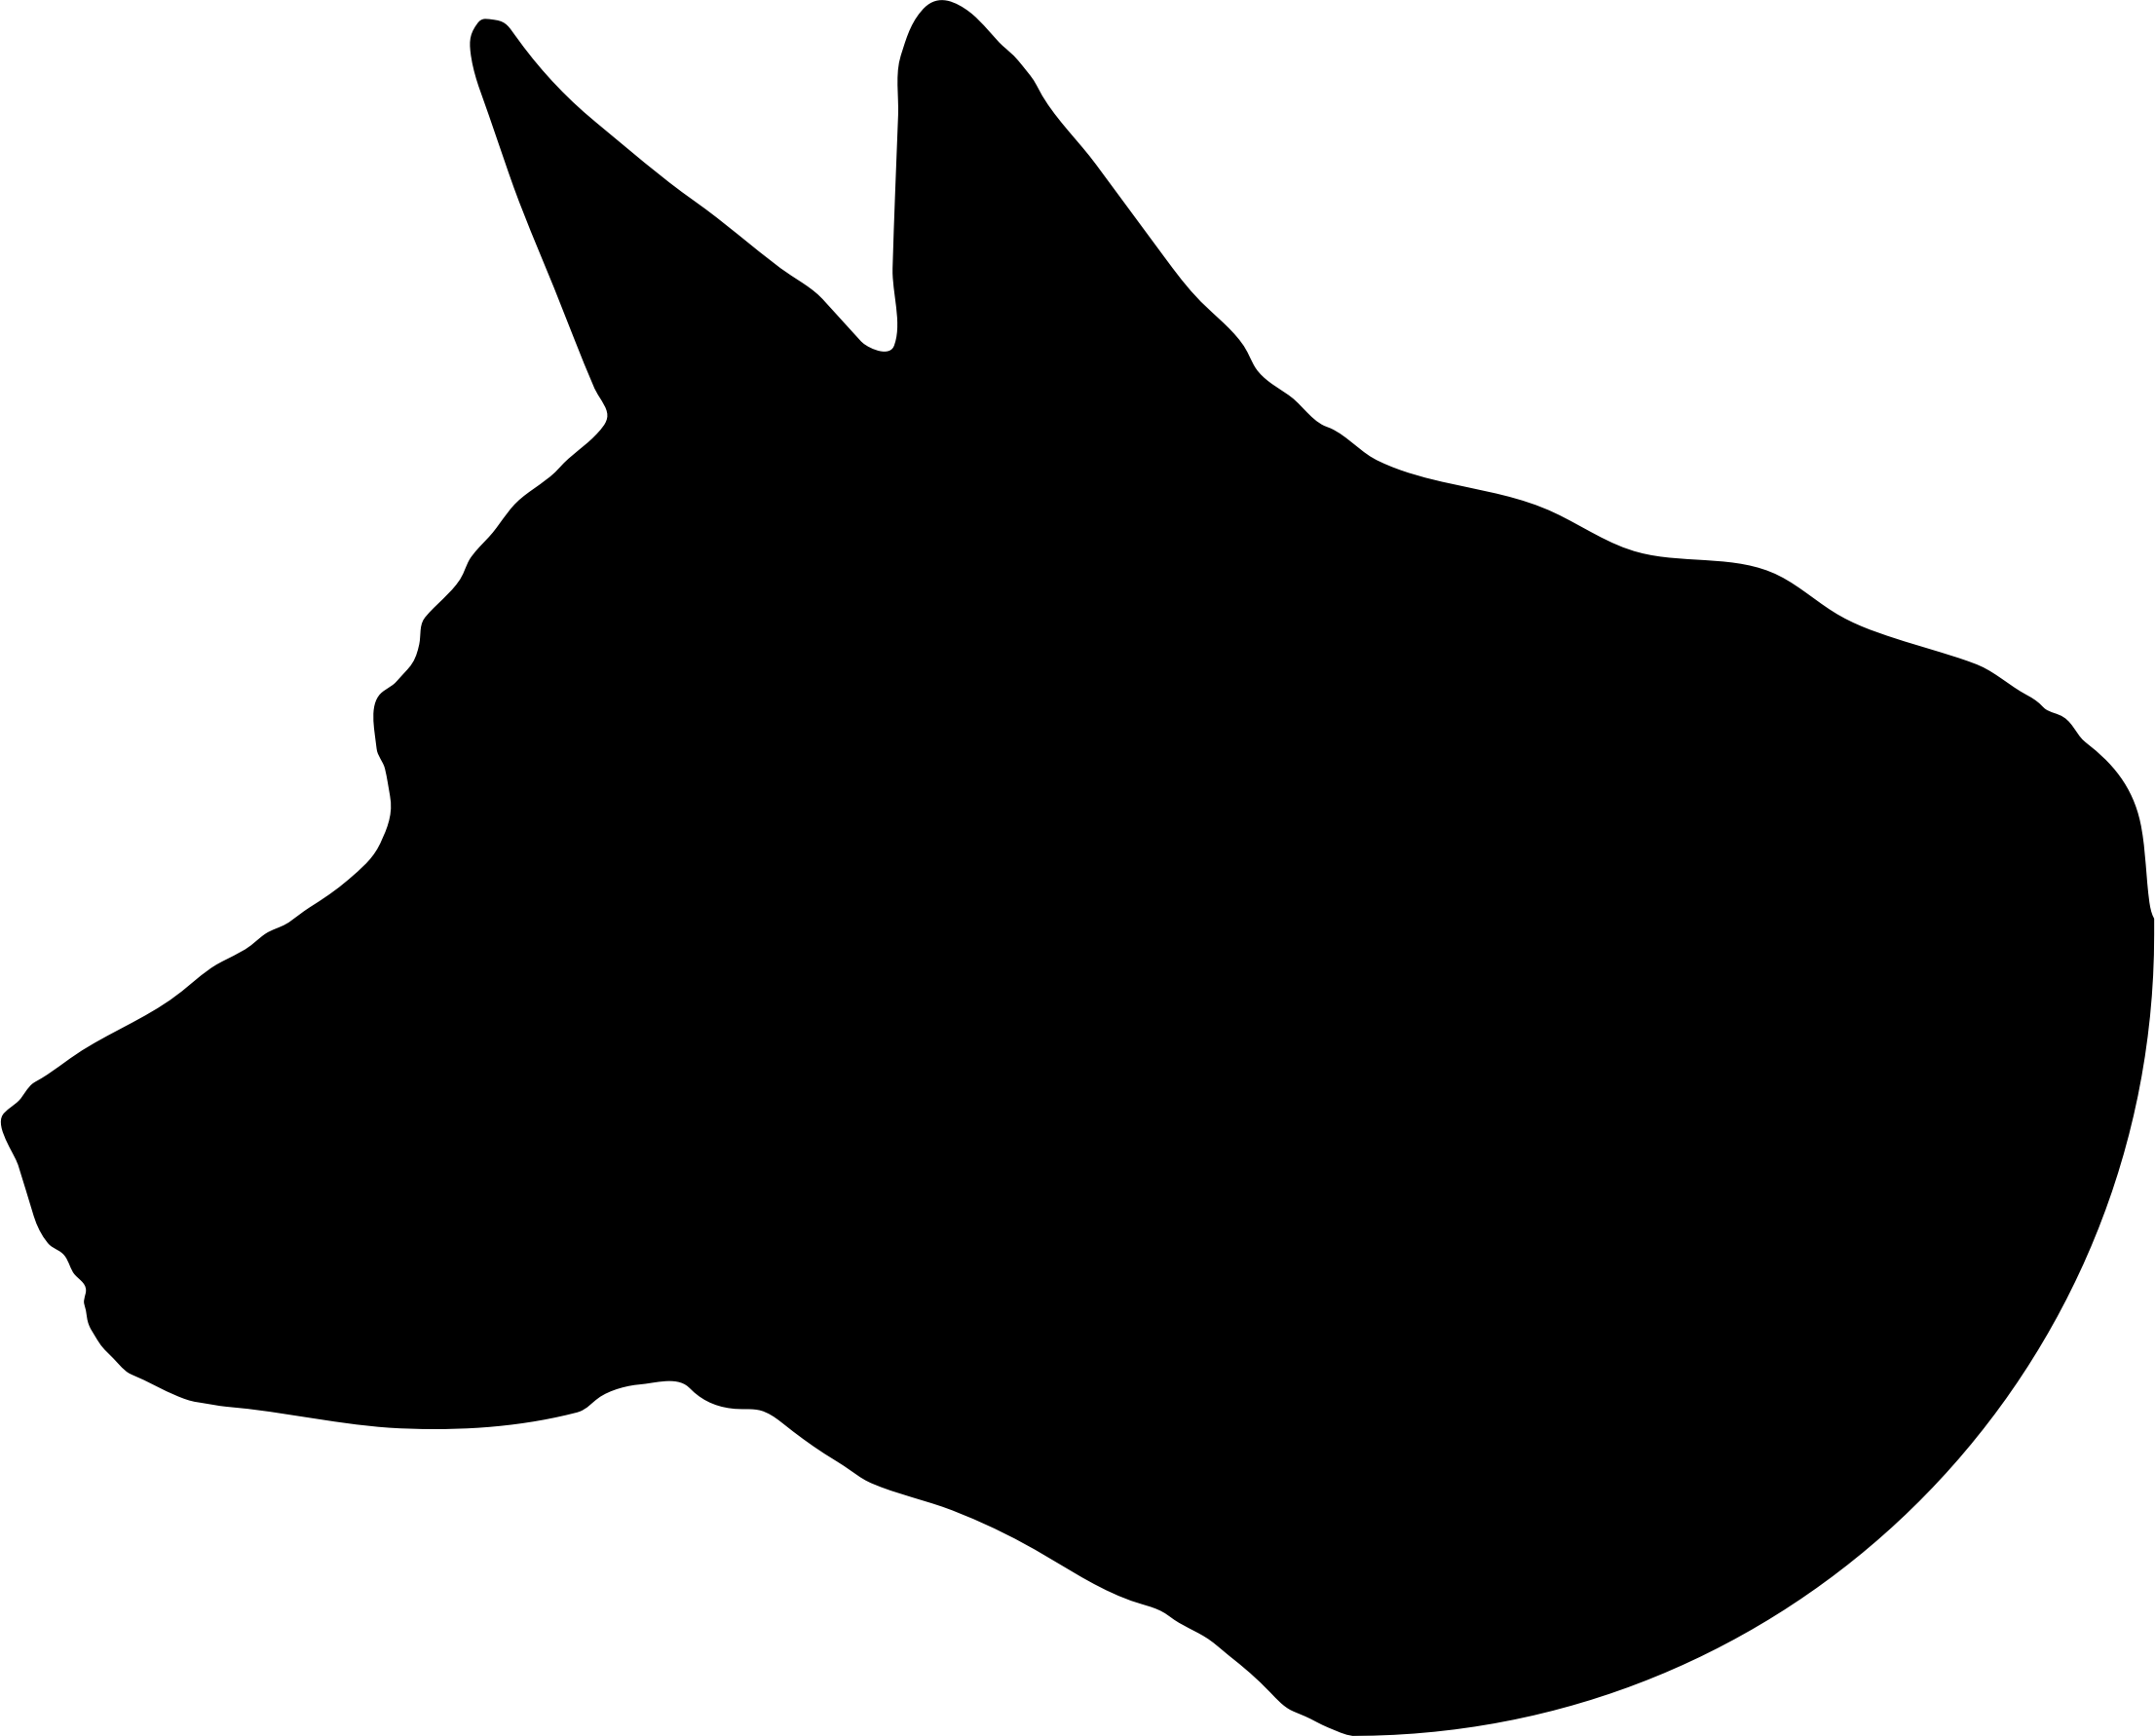 Head Silhouette - Fish Outline Black (2212x1782)